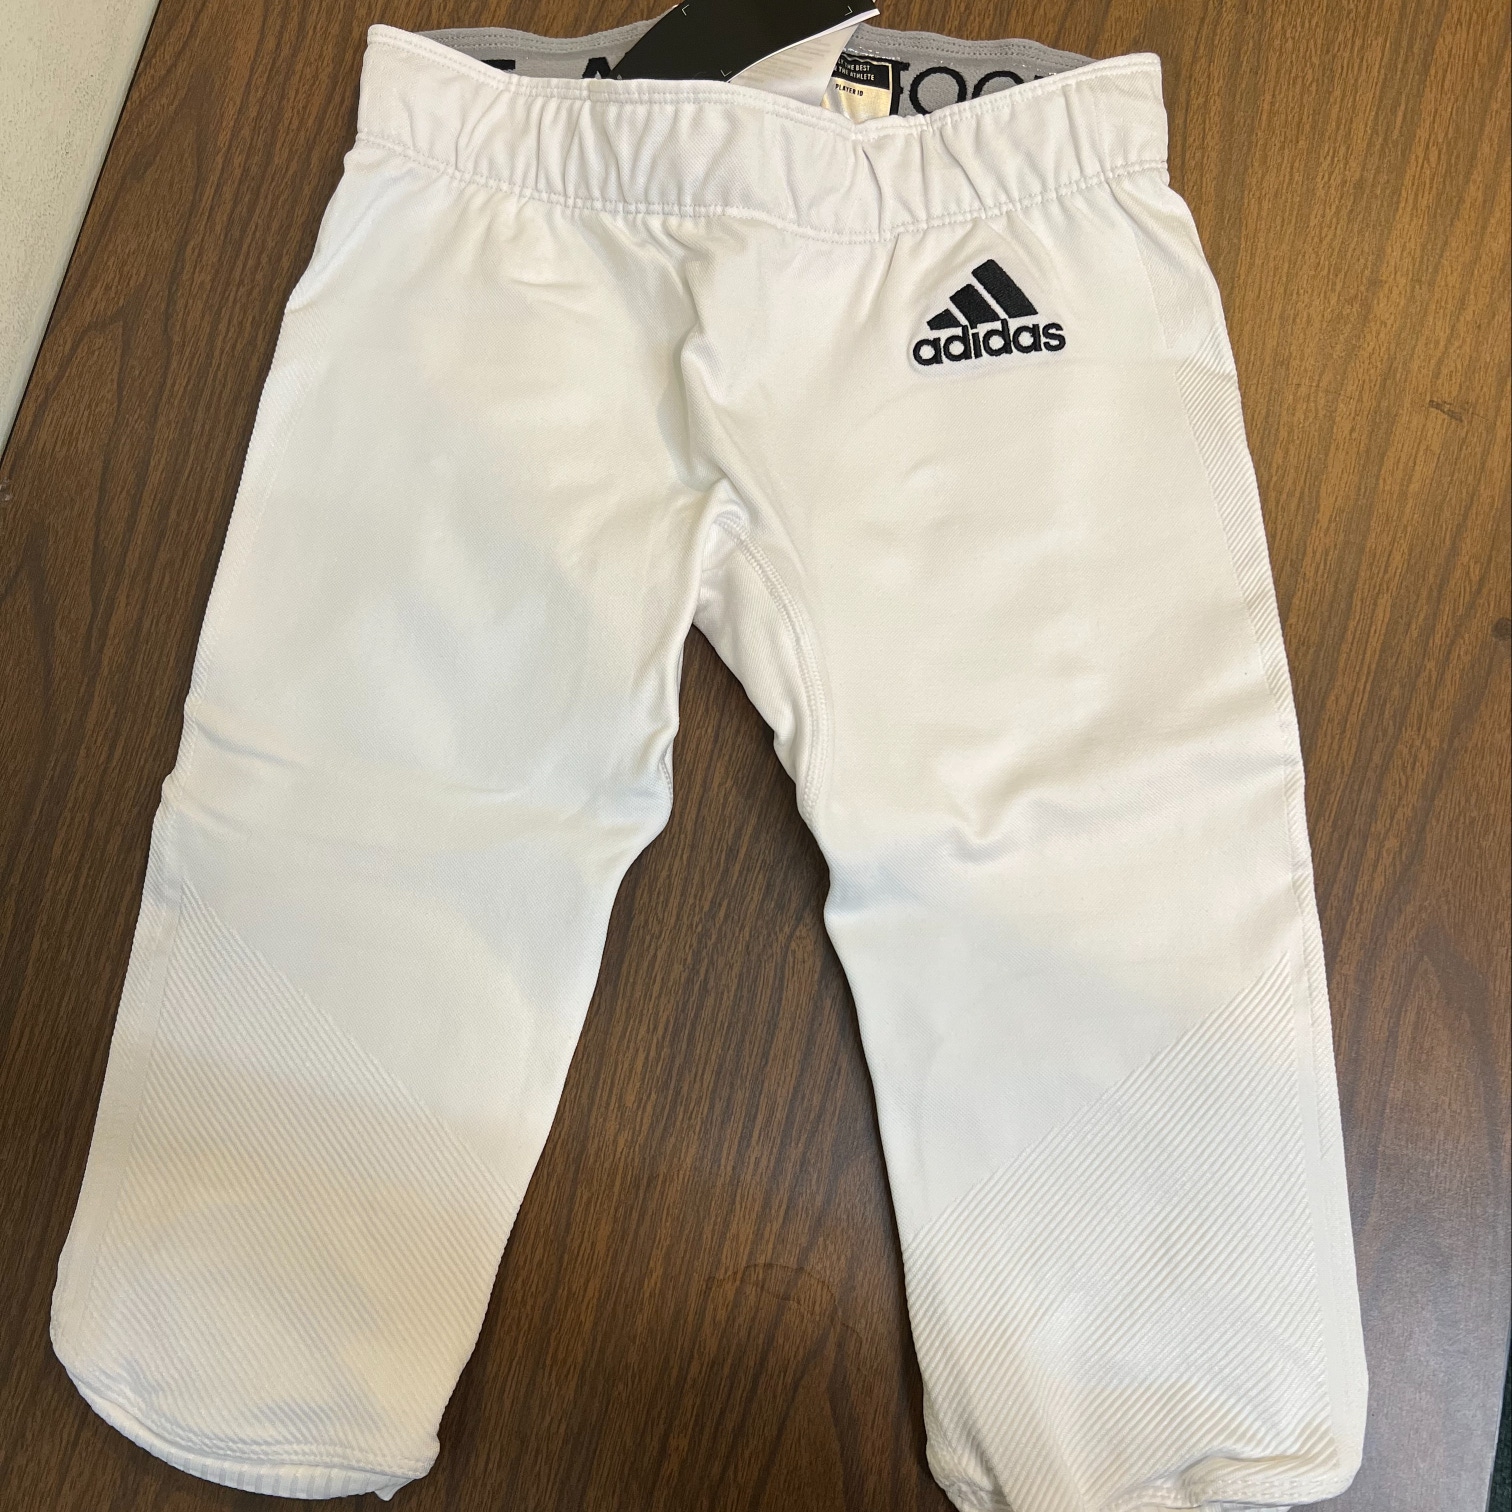 New Adidas White Football Pants - Adult Large